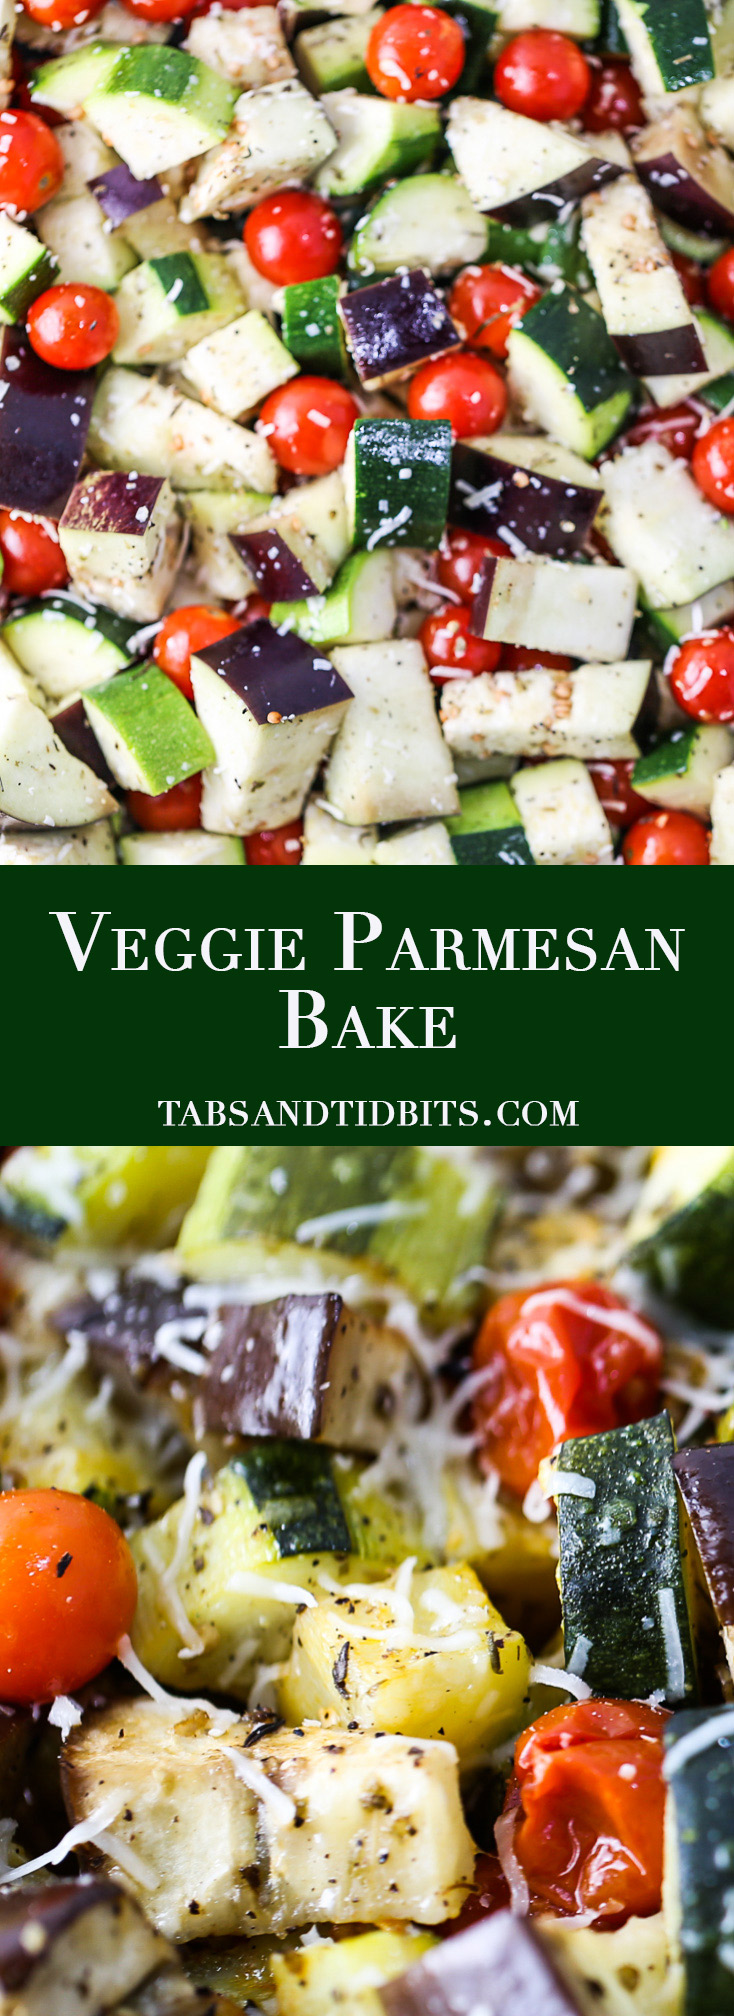 Veggie Parmesan Bake - This Parmesan Veggie Bake is full of savory coated vegetables and sharp parmesan cheese!